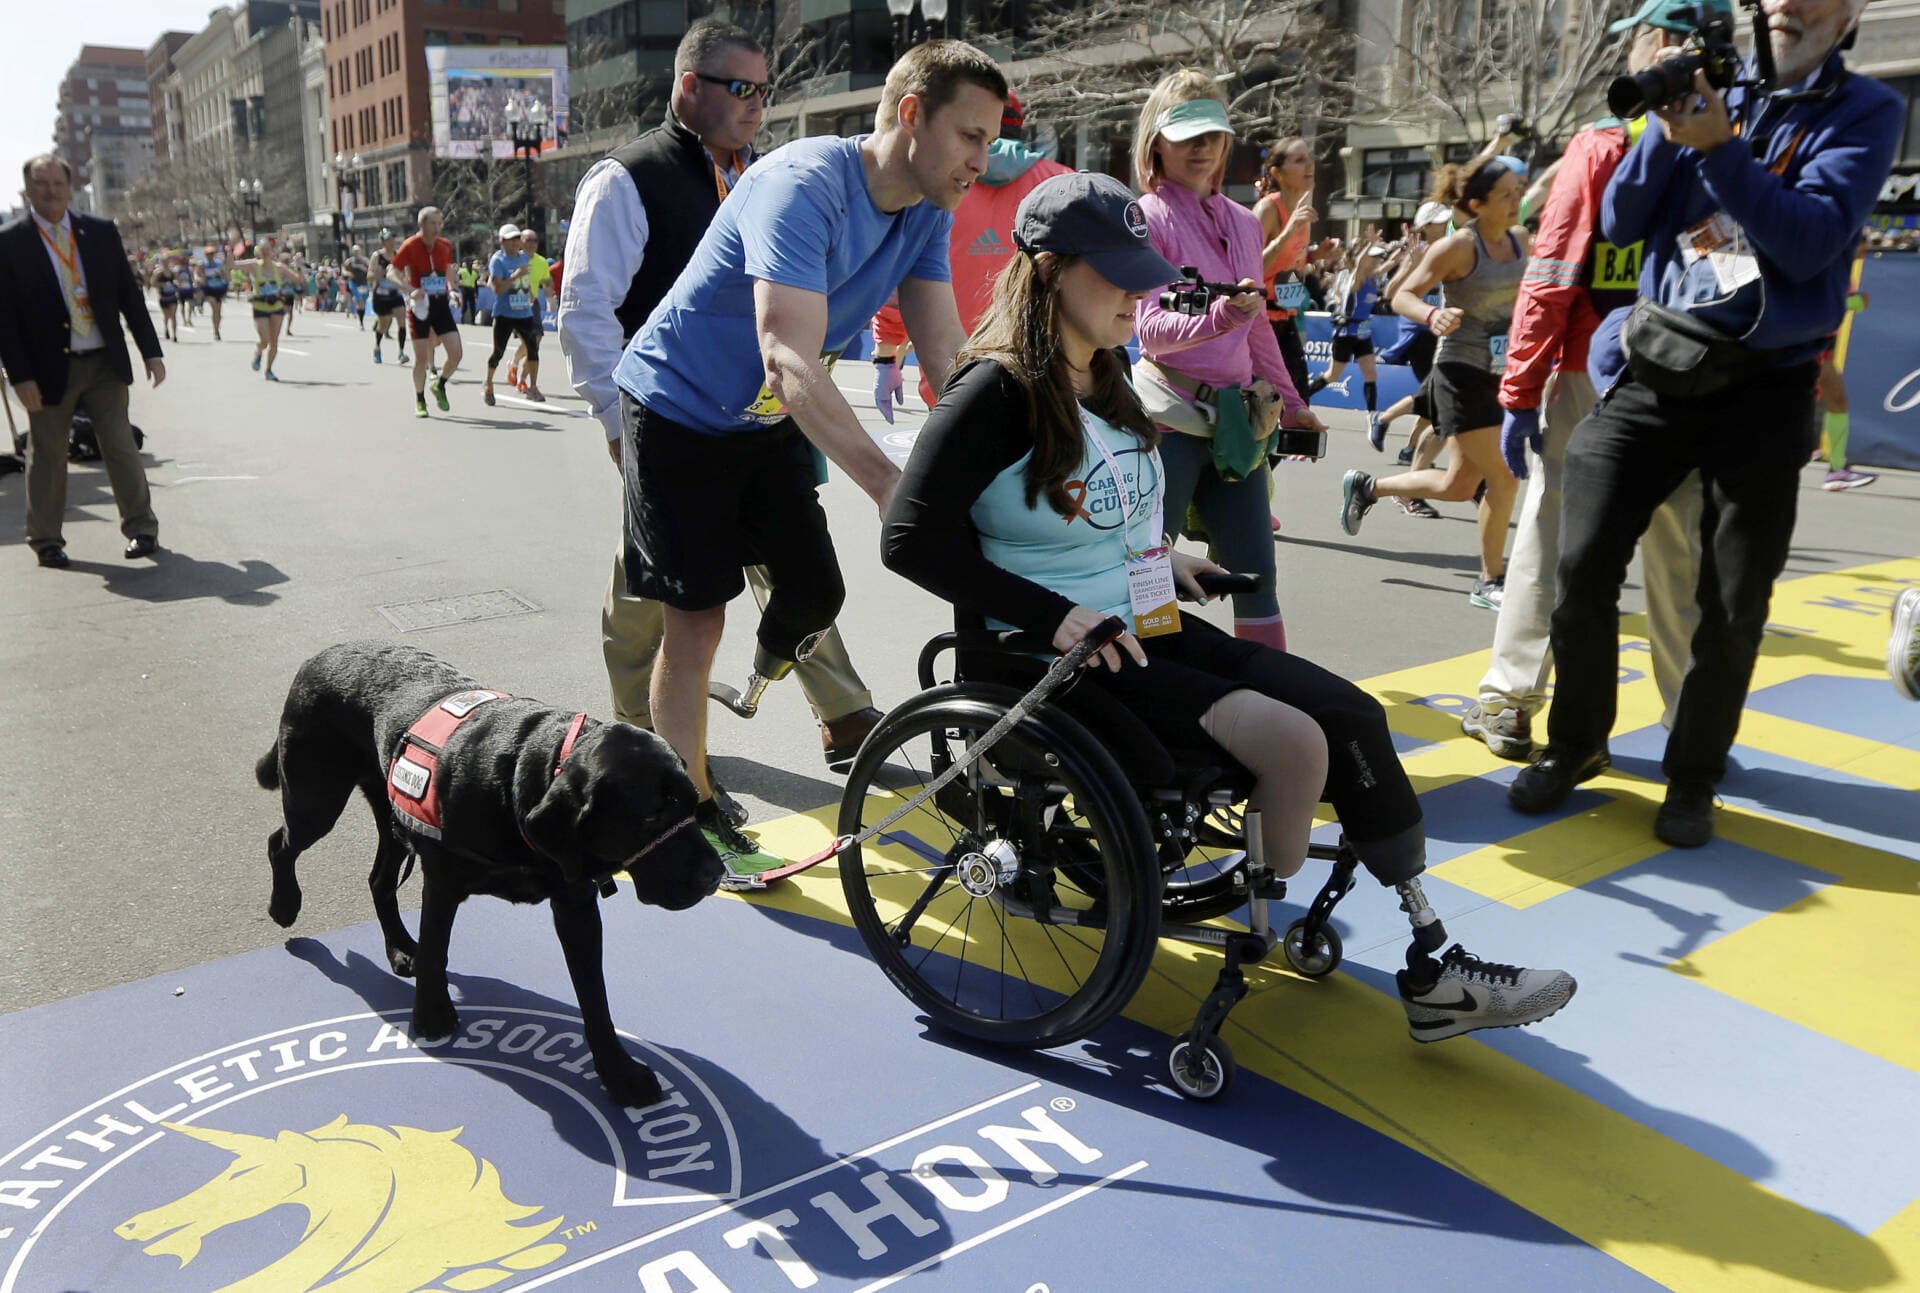 Boston Marathon bombings survivor Patrick Downes pushes his wife, Jessica Kensky, across the finish line after he finished the 120th Boston Marathon on Monday, April 18, 2016, in Boston. (Elise Amendola/AP)